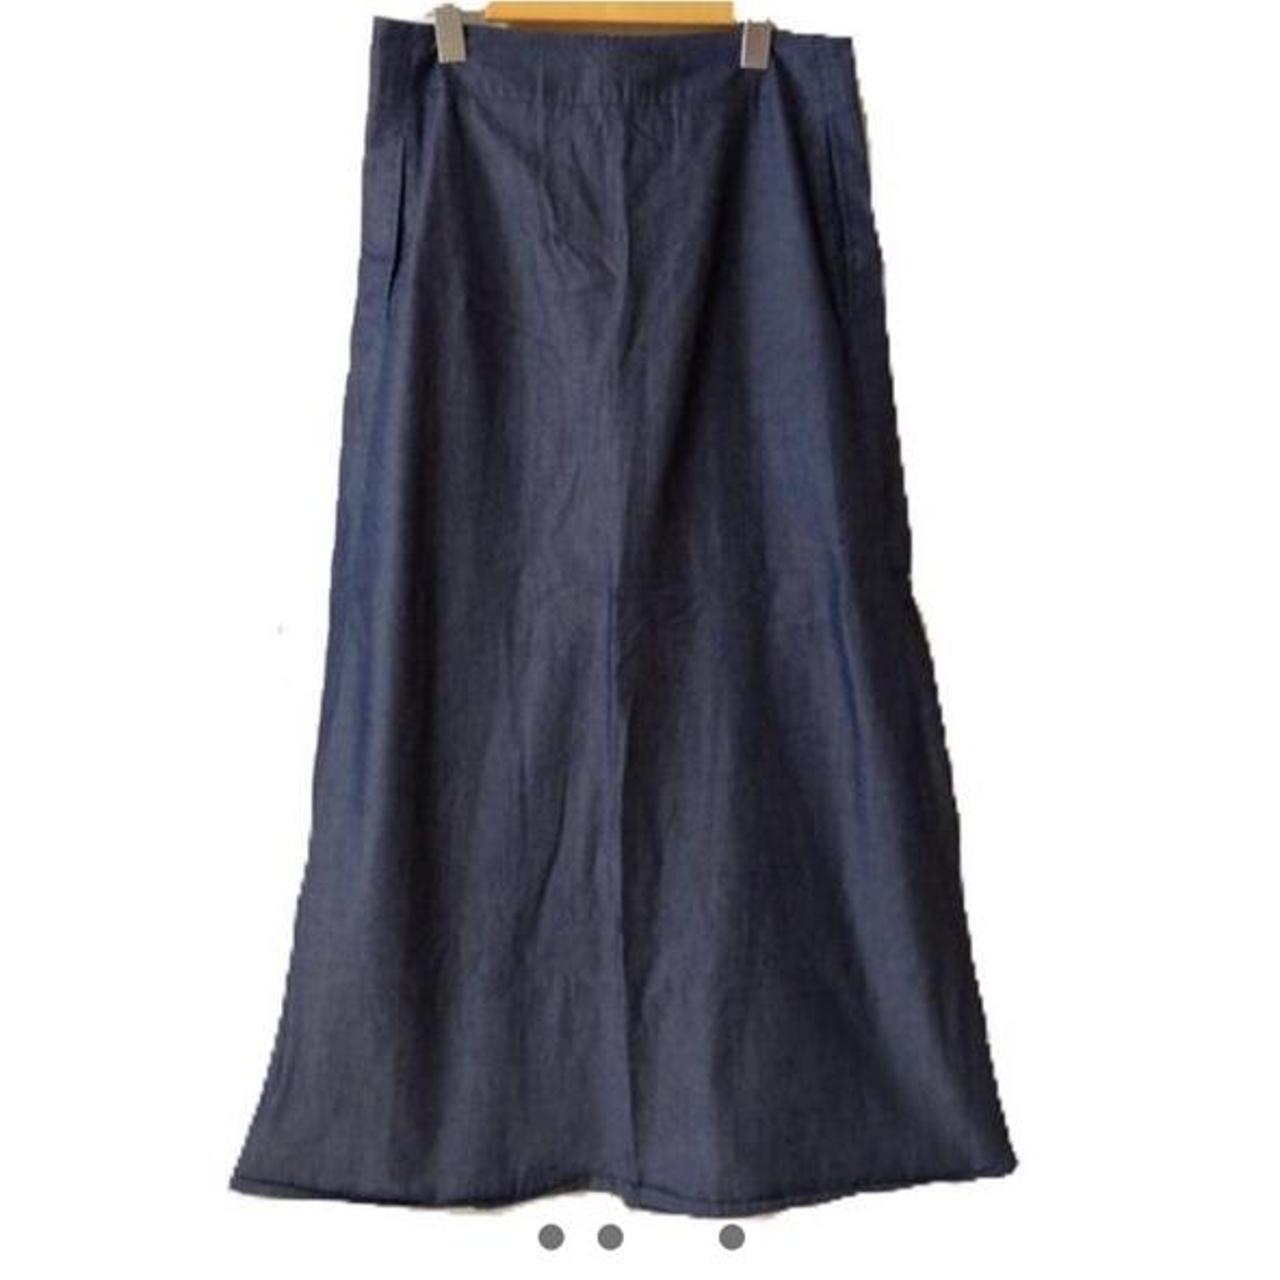 KOOKAÏ Women's Skirt (3)